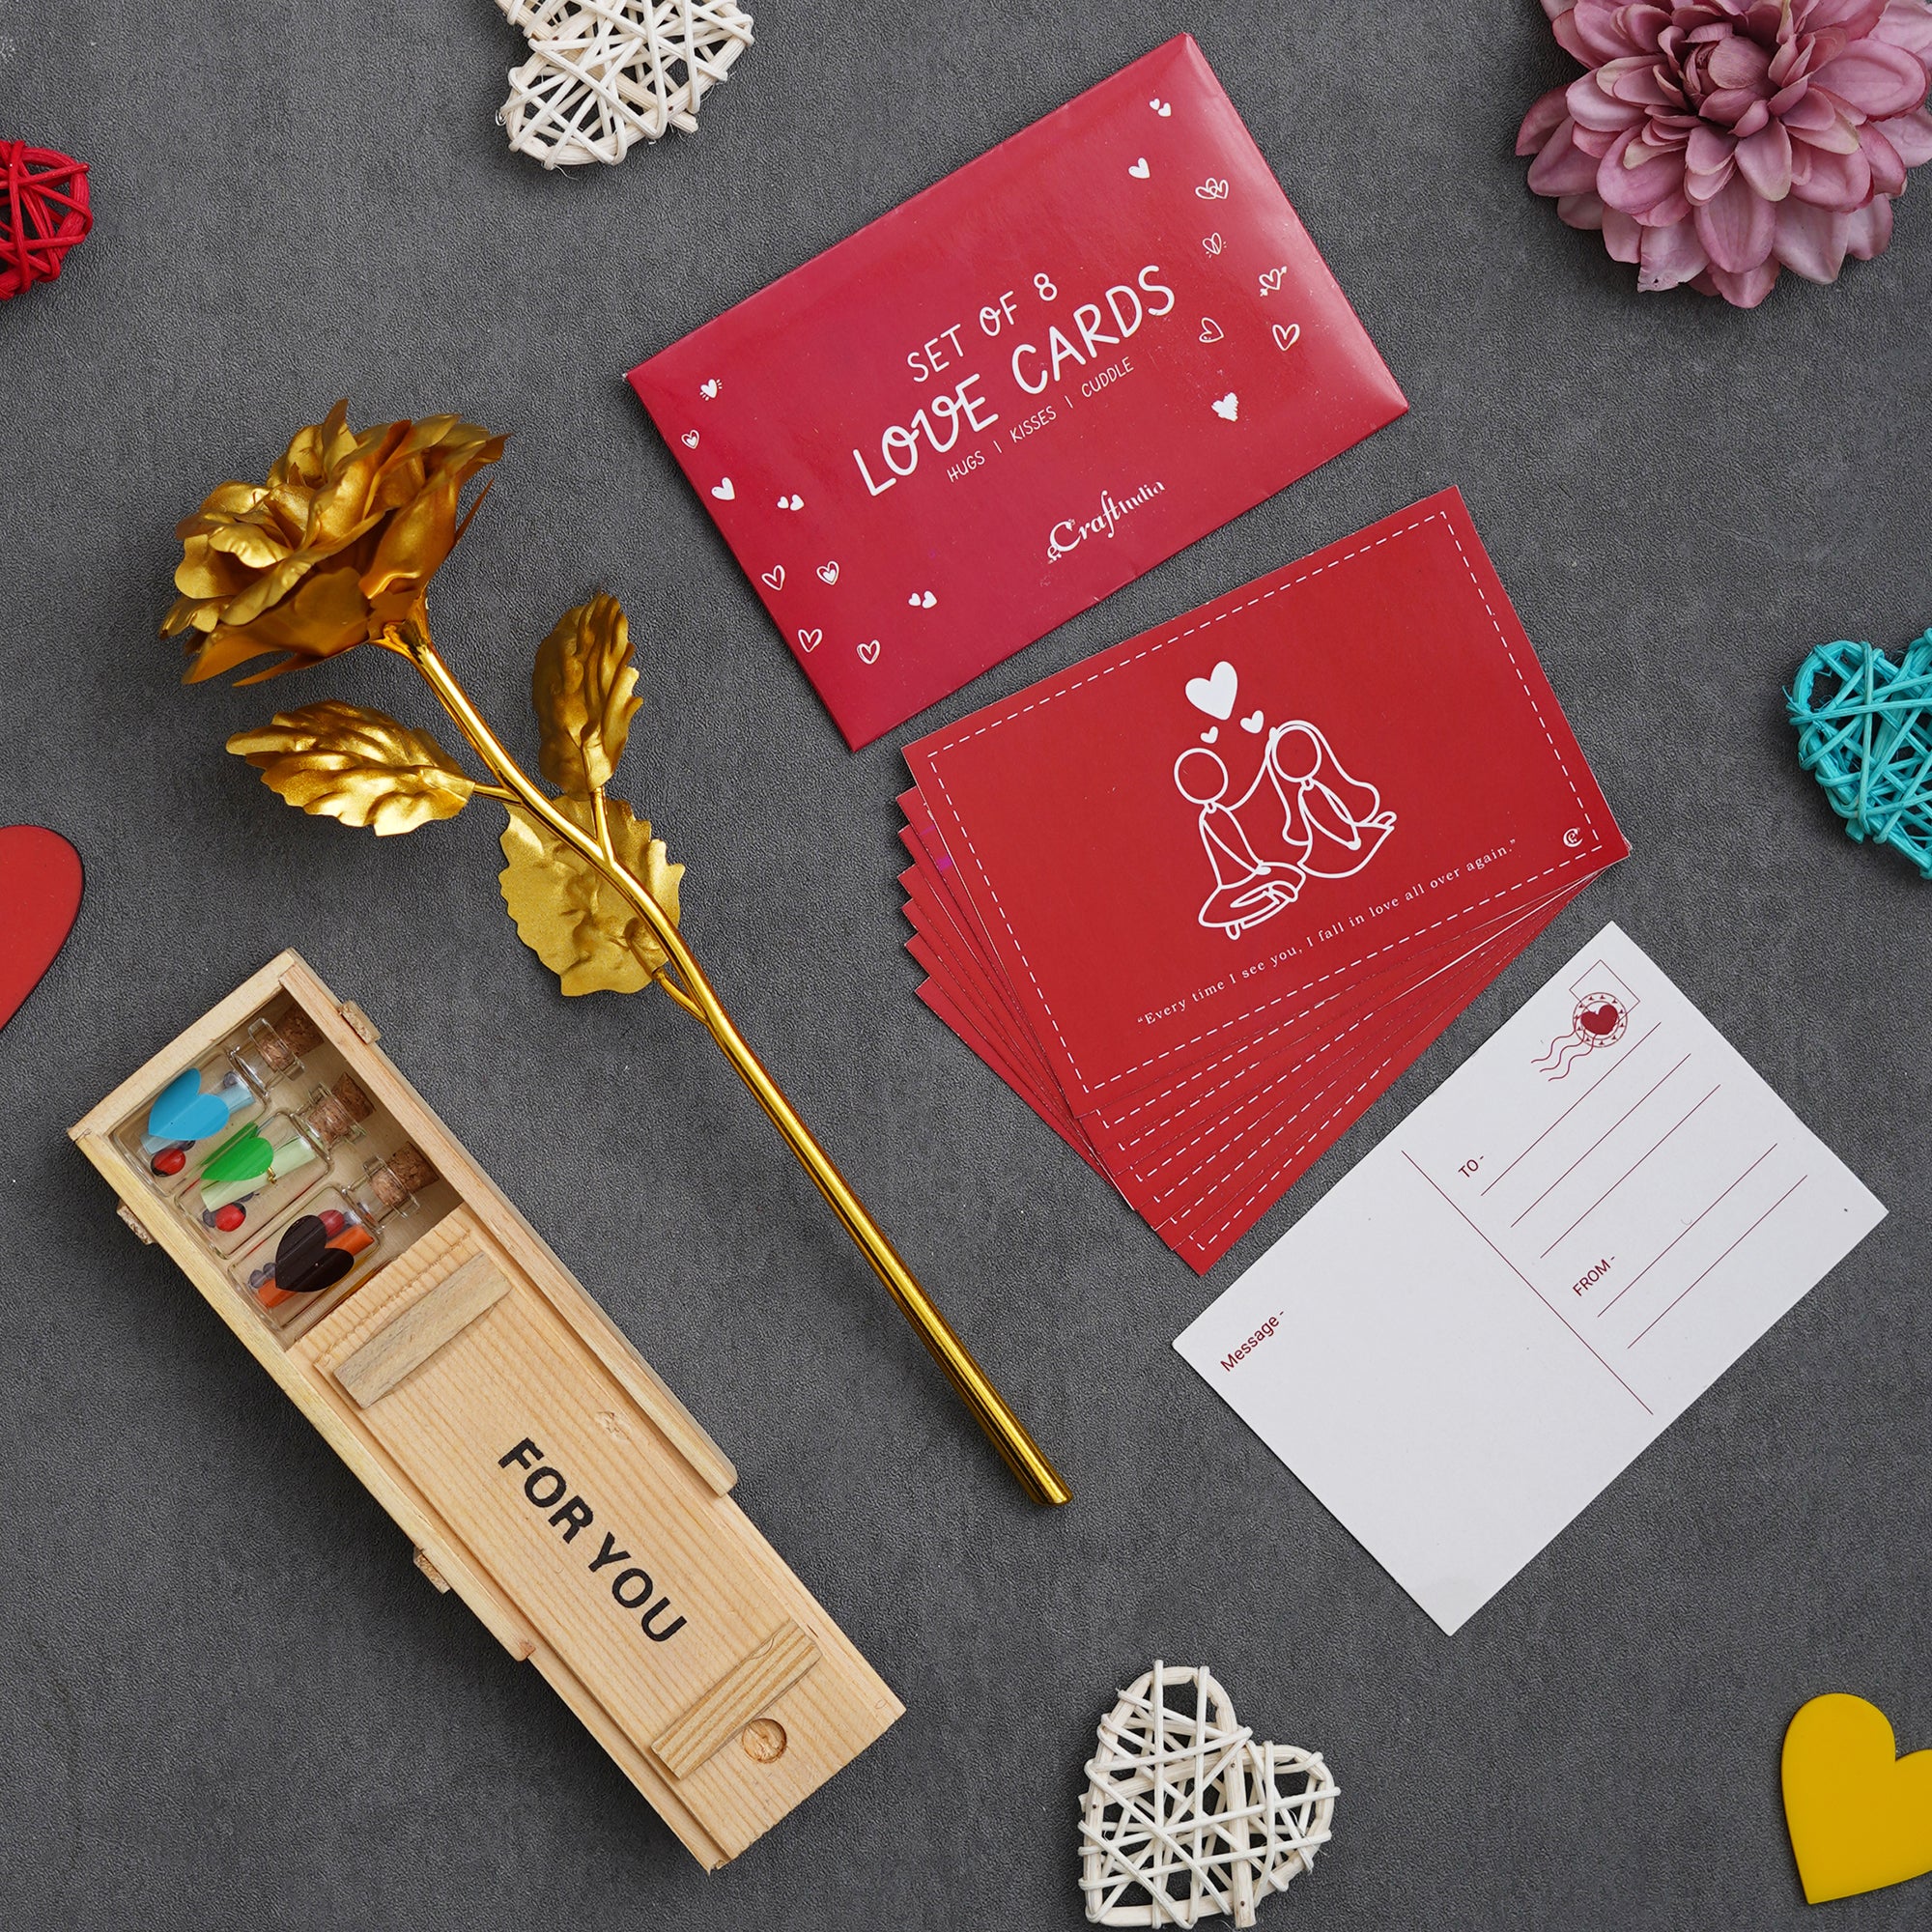 Valentine Combo of Pack of 8 Love Gift Cards, Golden Rose Gift Set, Wooden Box "For You" Message Bottle Set